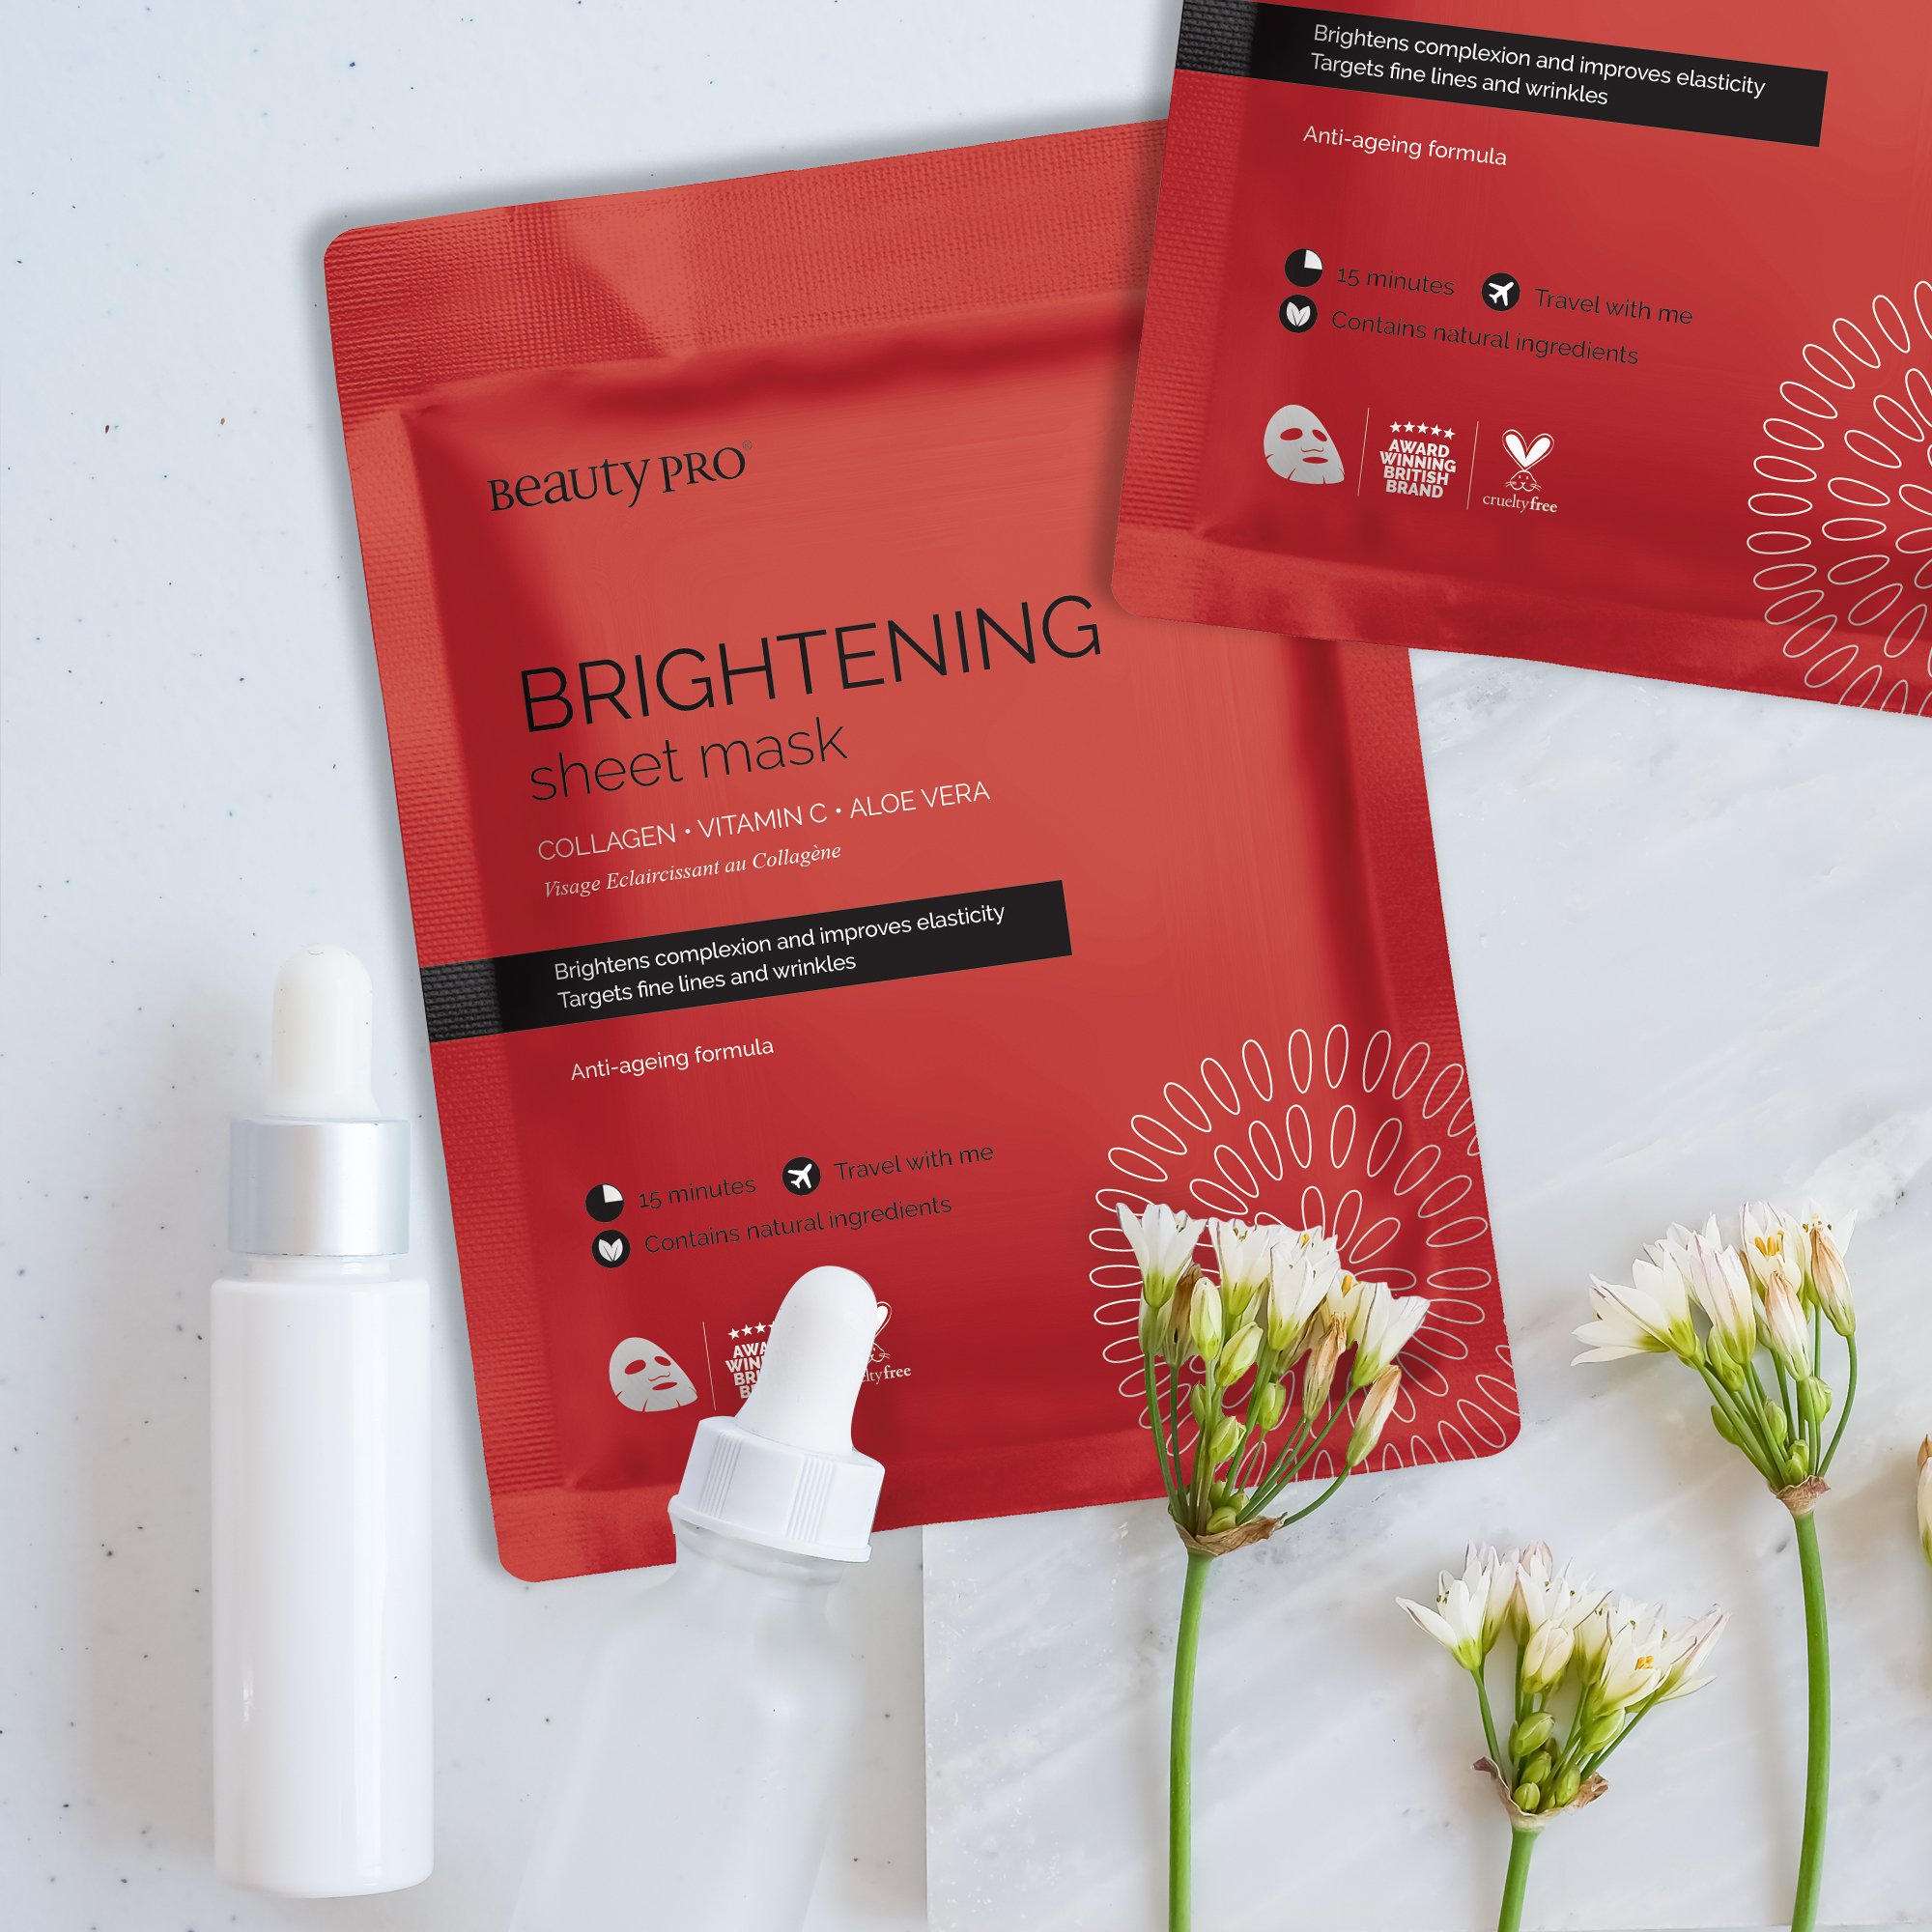 BeautyPro's Brightening Collagen Sheet Mask with Vitamin C 